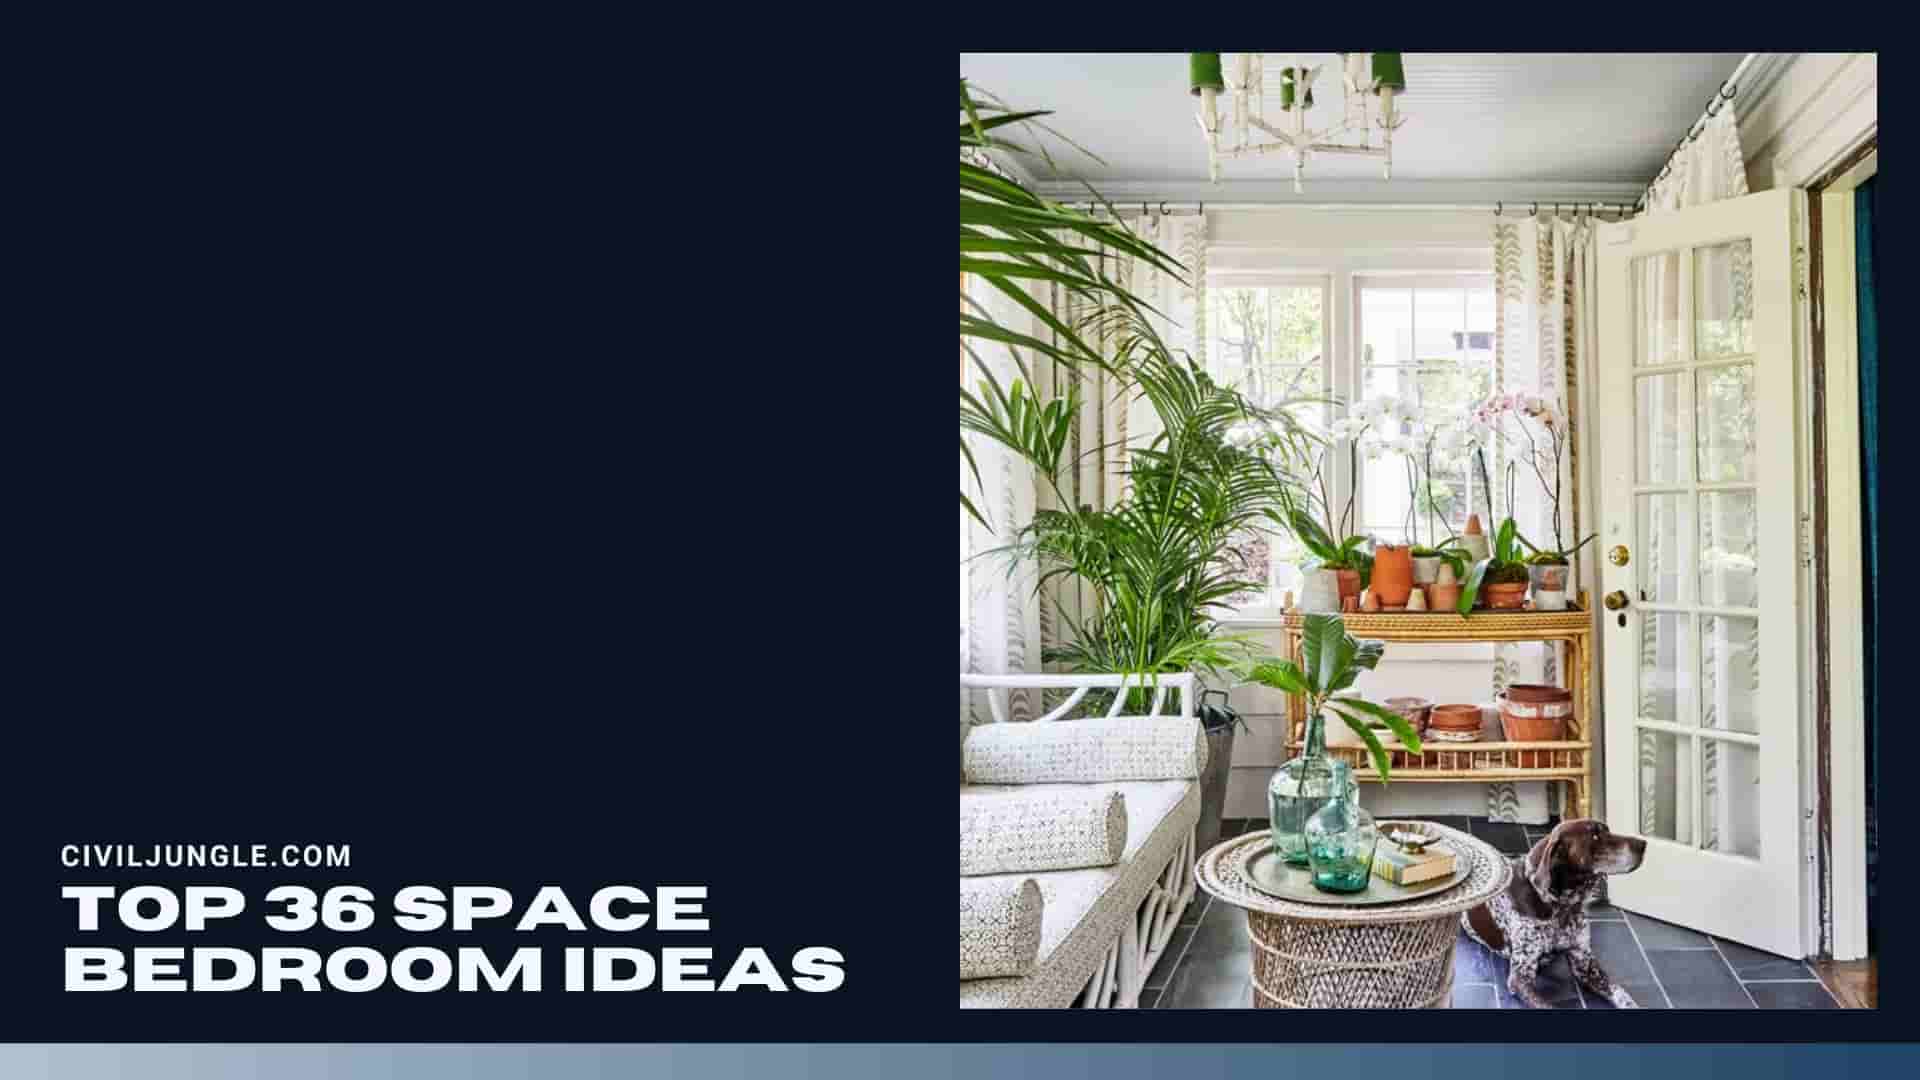 Top 36 Space Bedroom Ideas